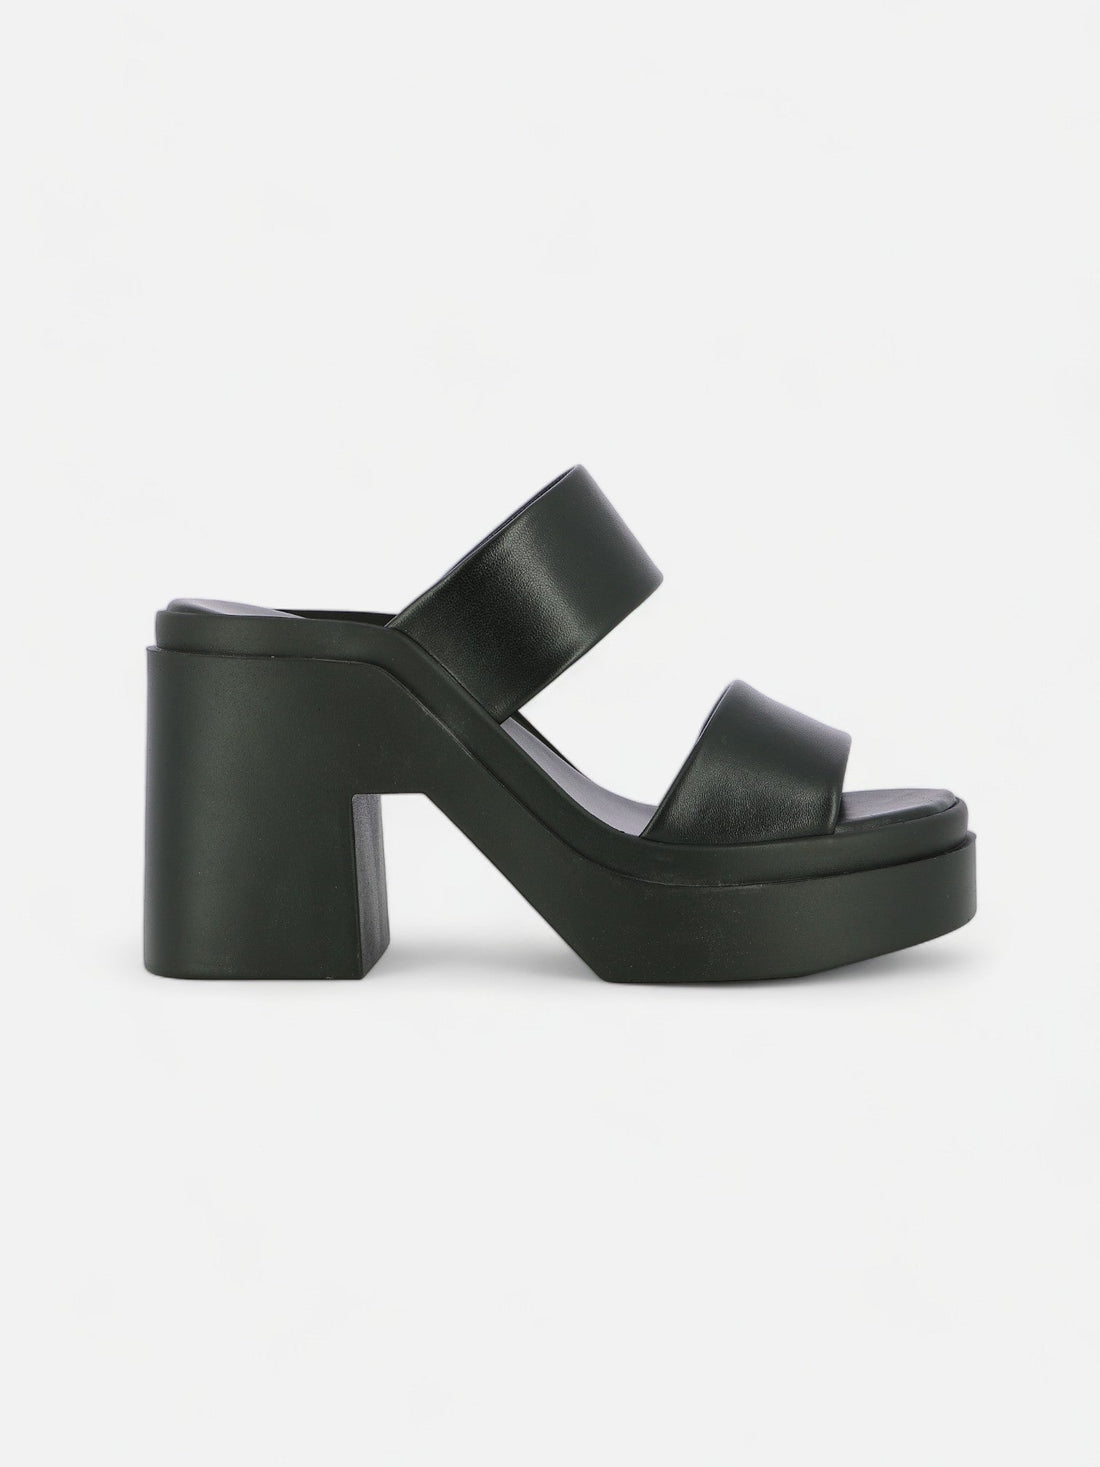 SANDALS - NEXT sandals, lambskin black - 3606063981408 - Clergerie Paris - Europe